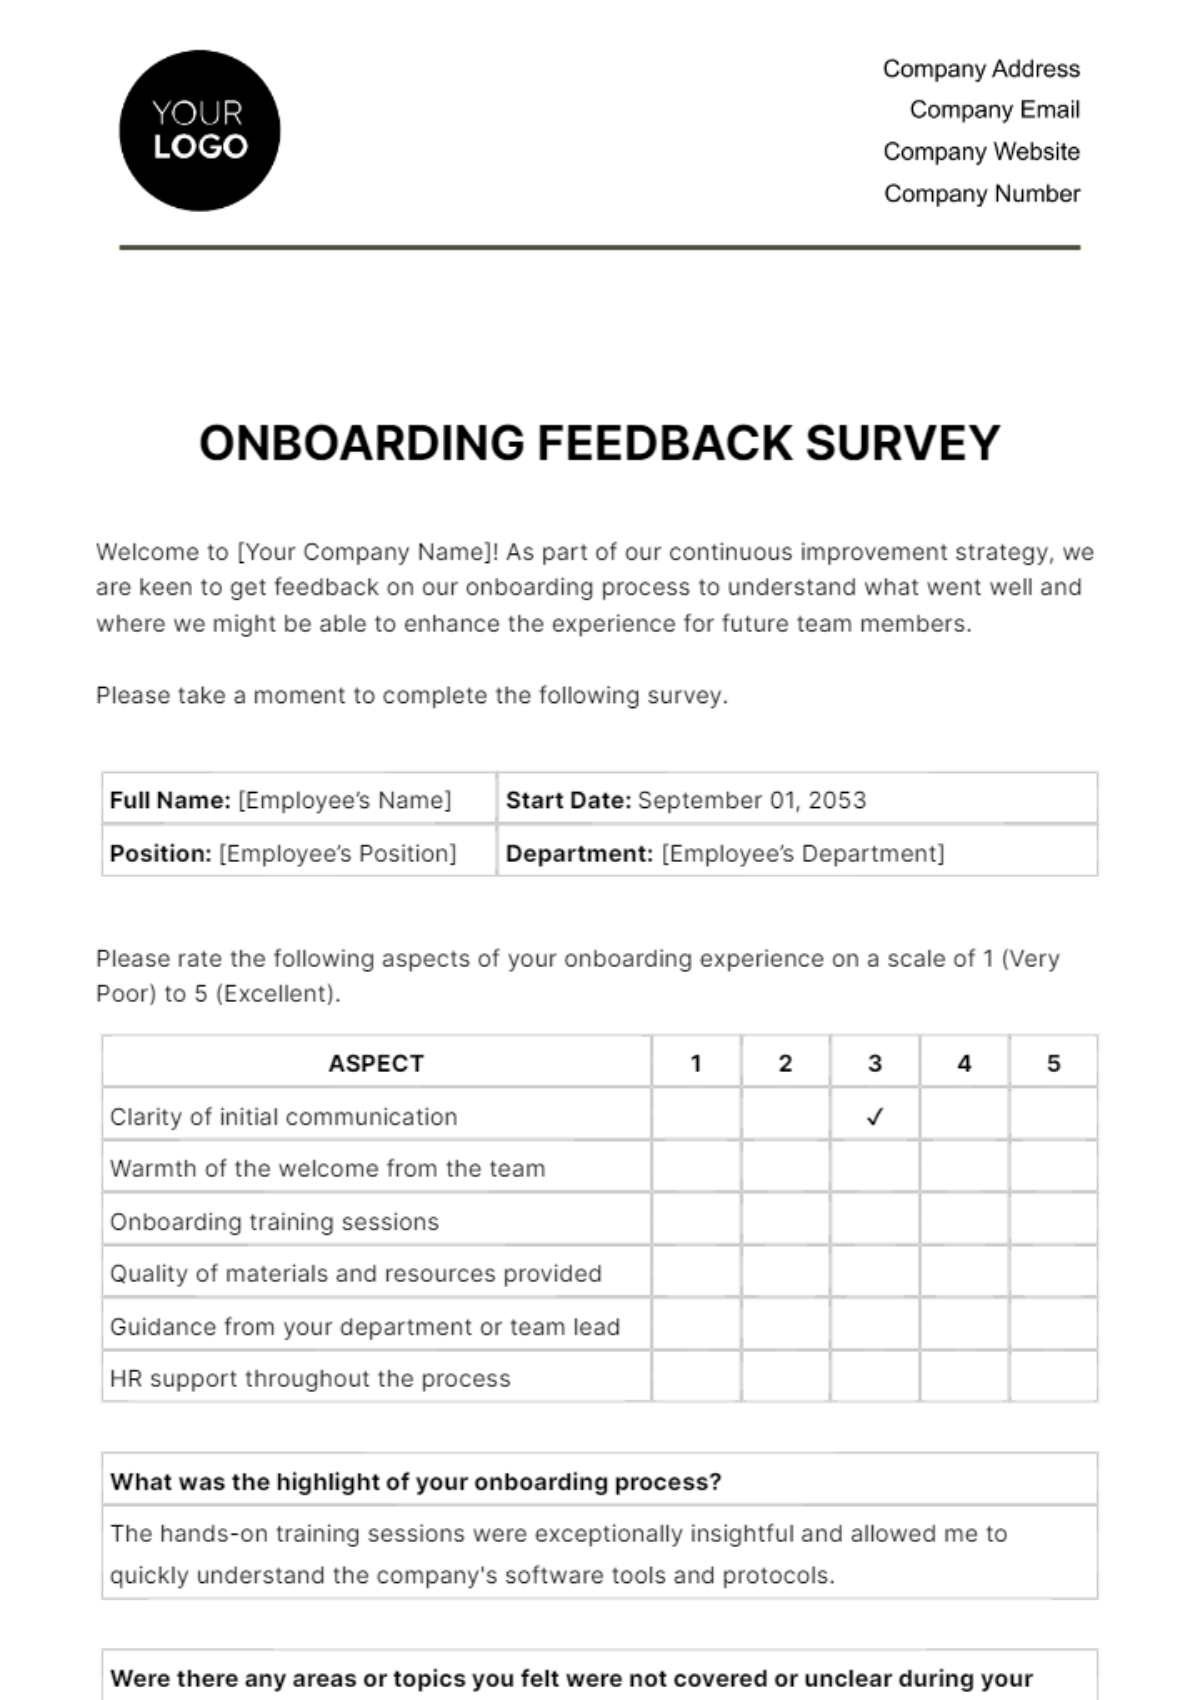 Free Onboarding Feedback Survey HR Template